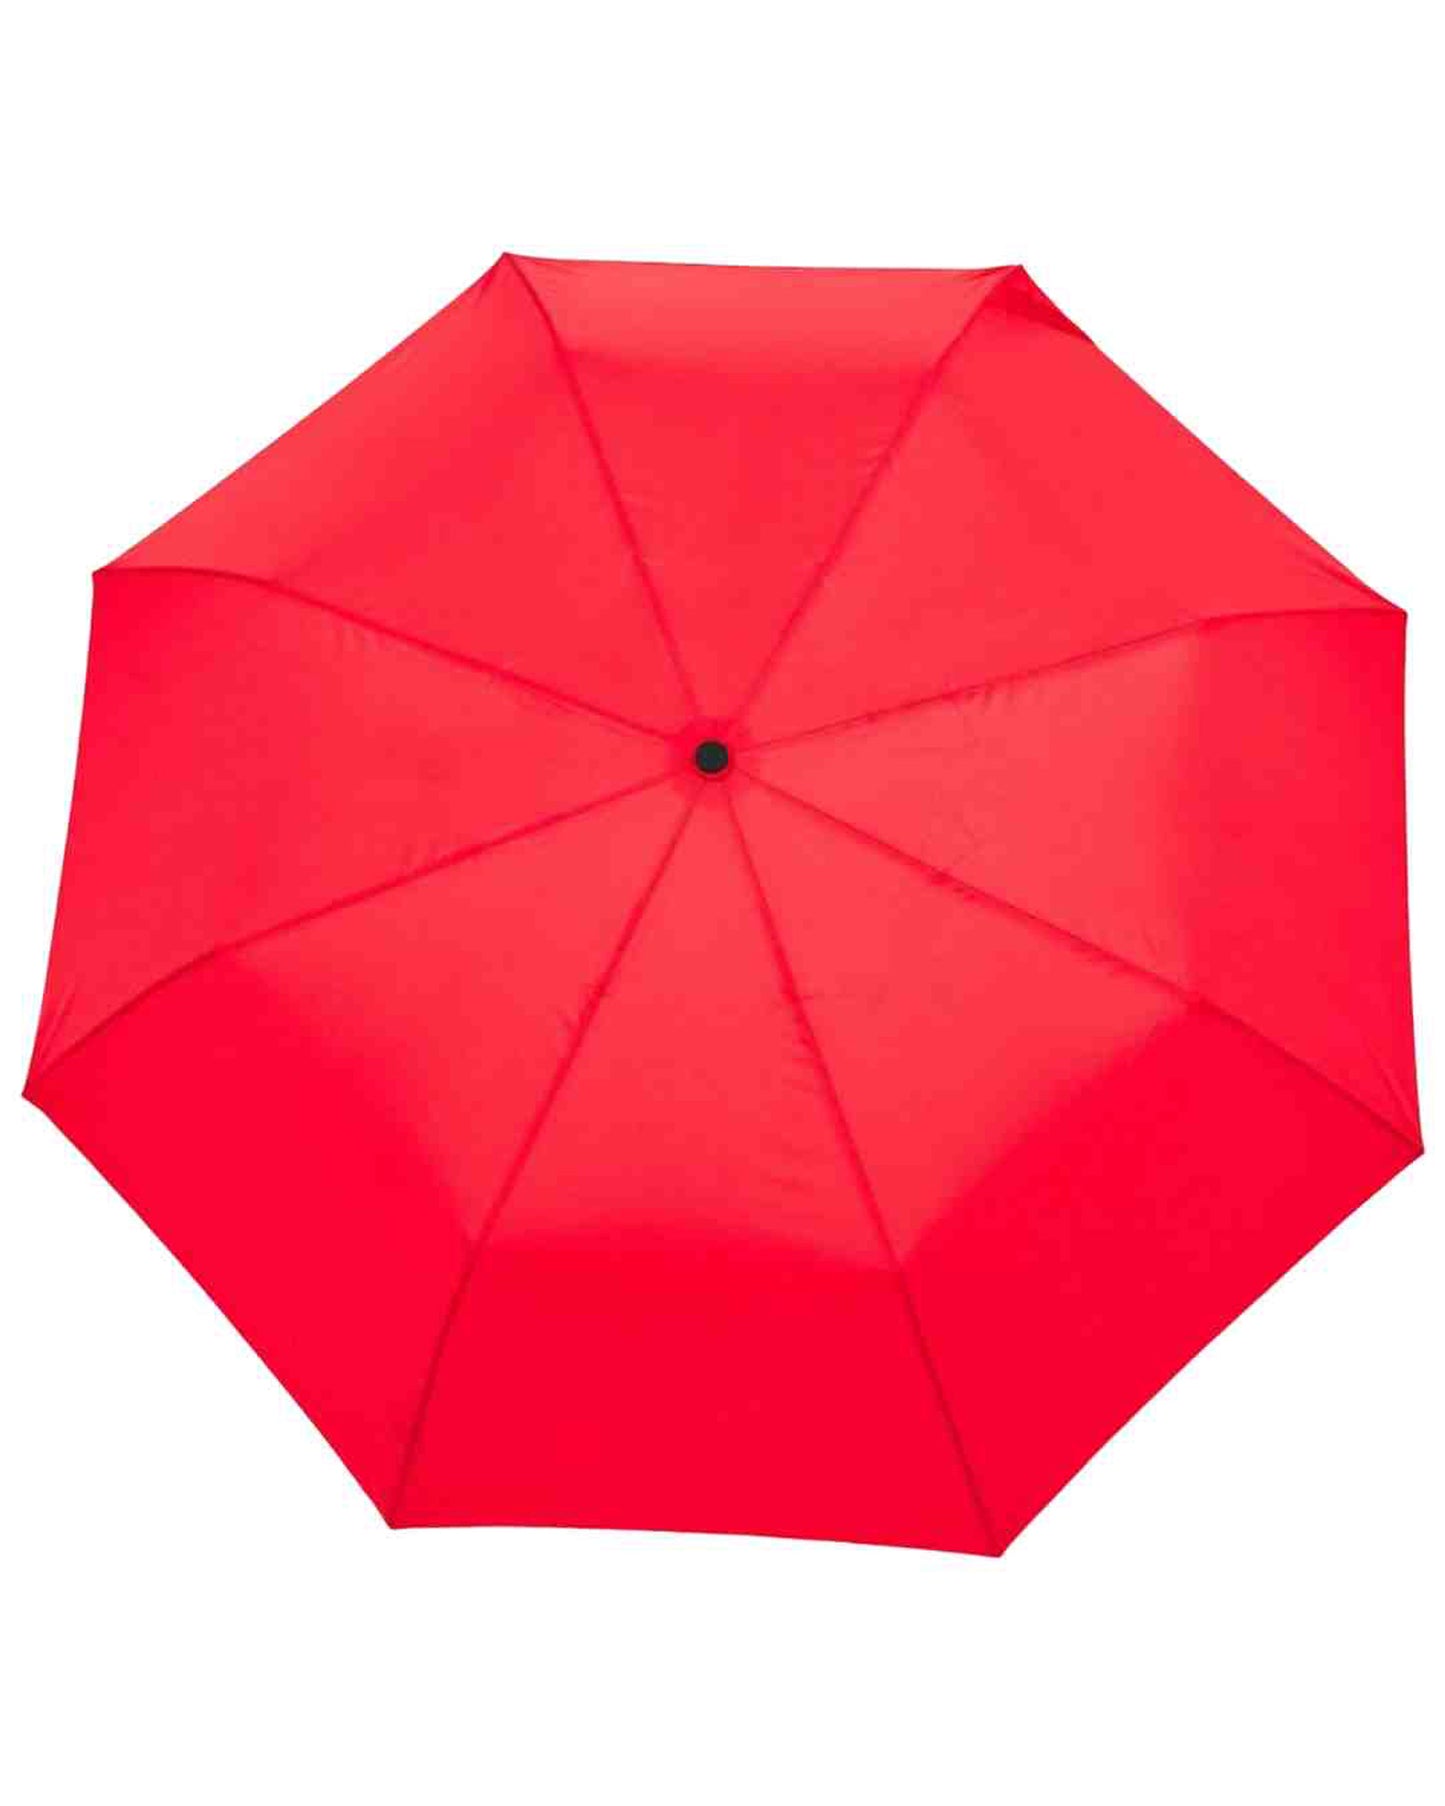 ORIGINAL DUCKHEAD Compact Umbrella in Red available at Lahn.shop